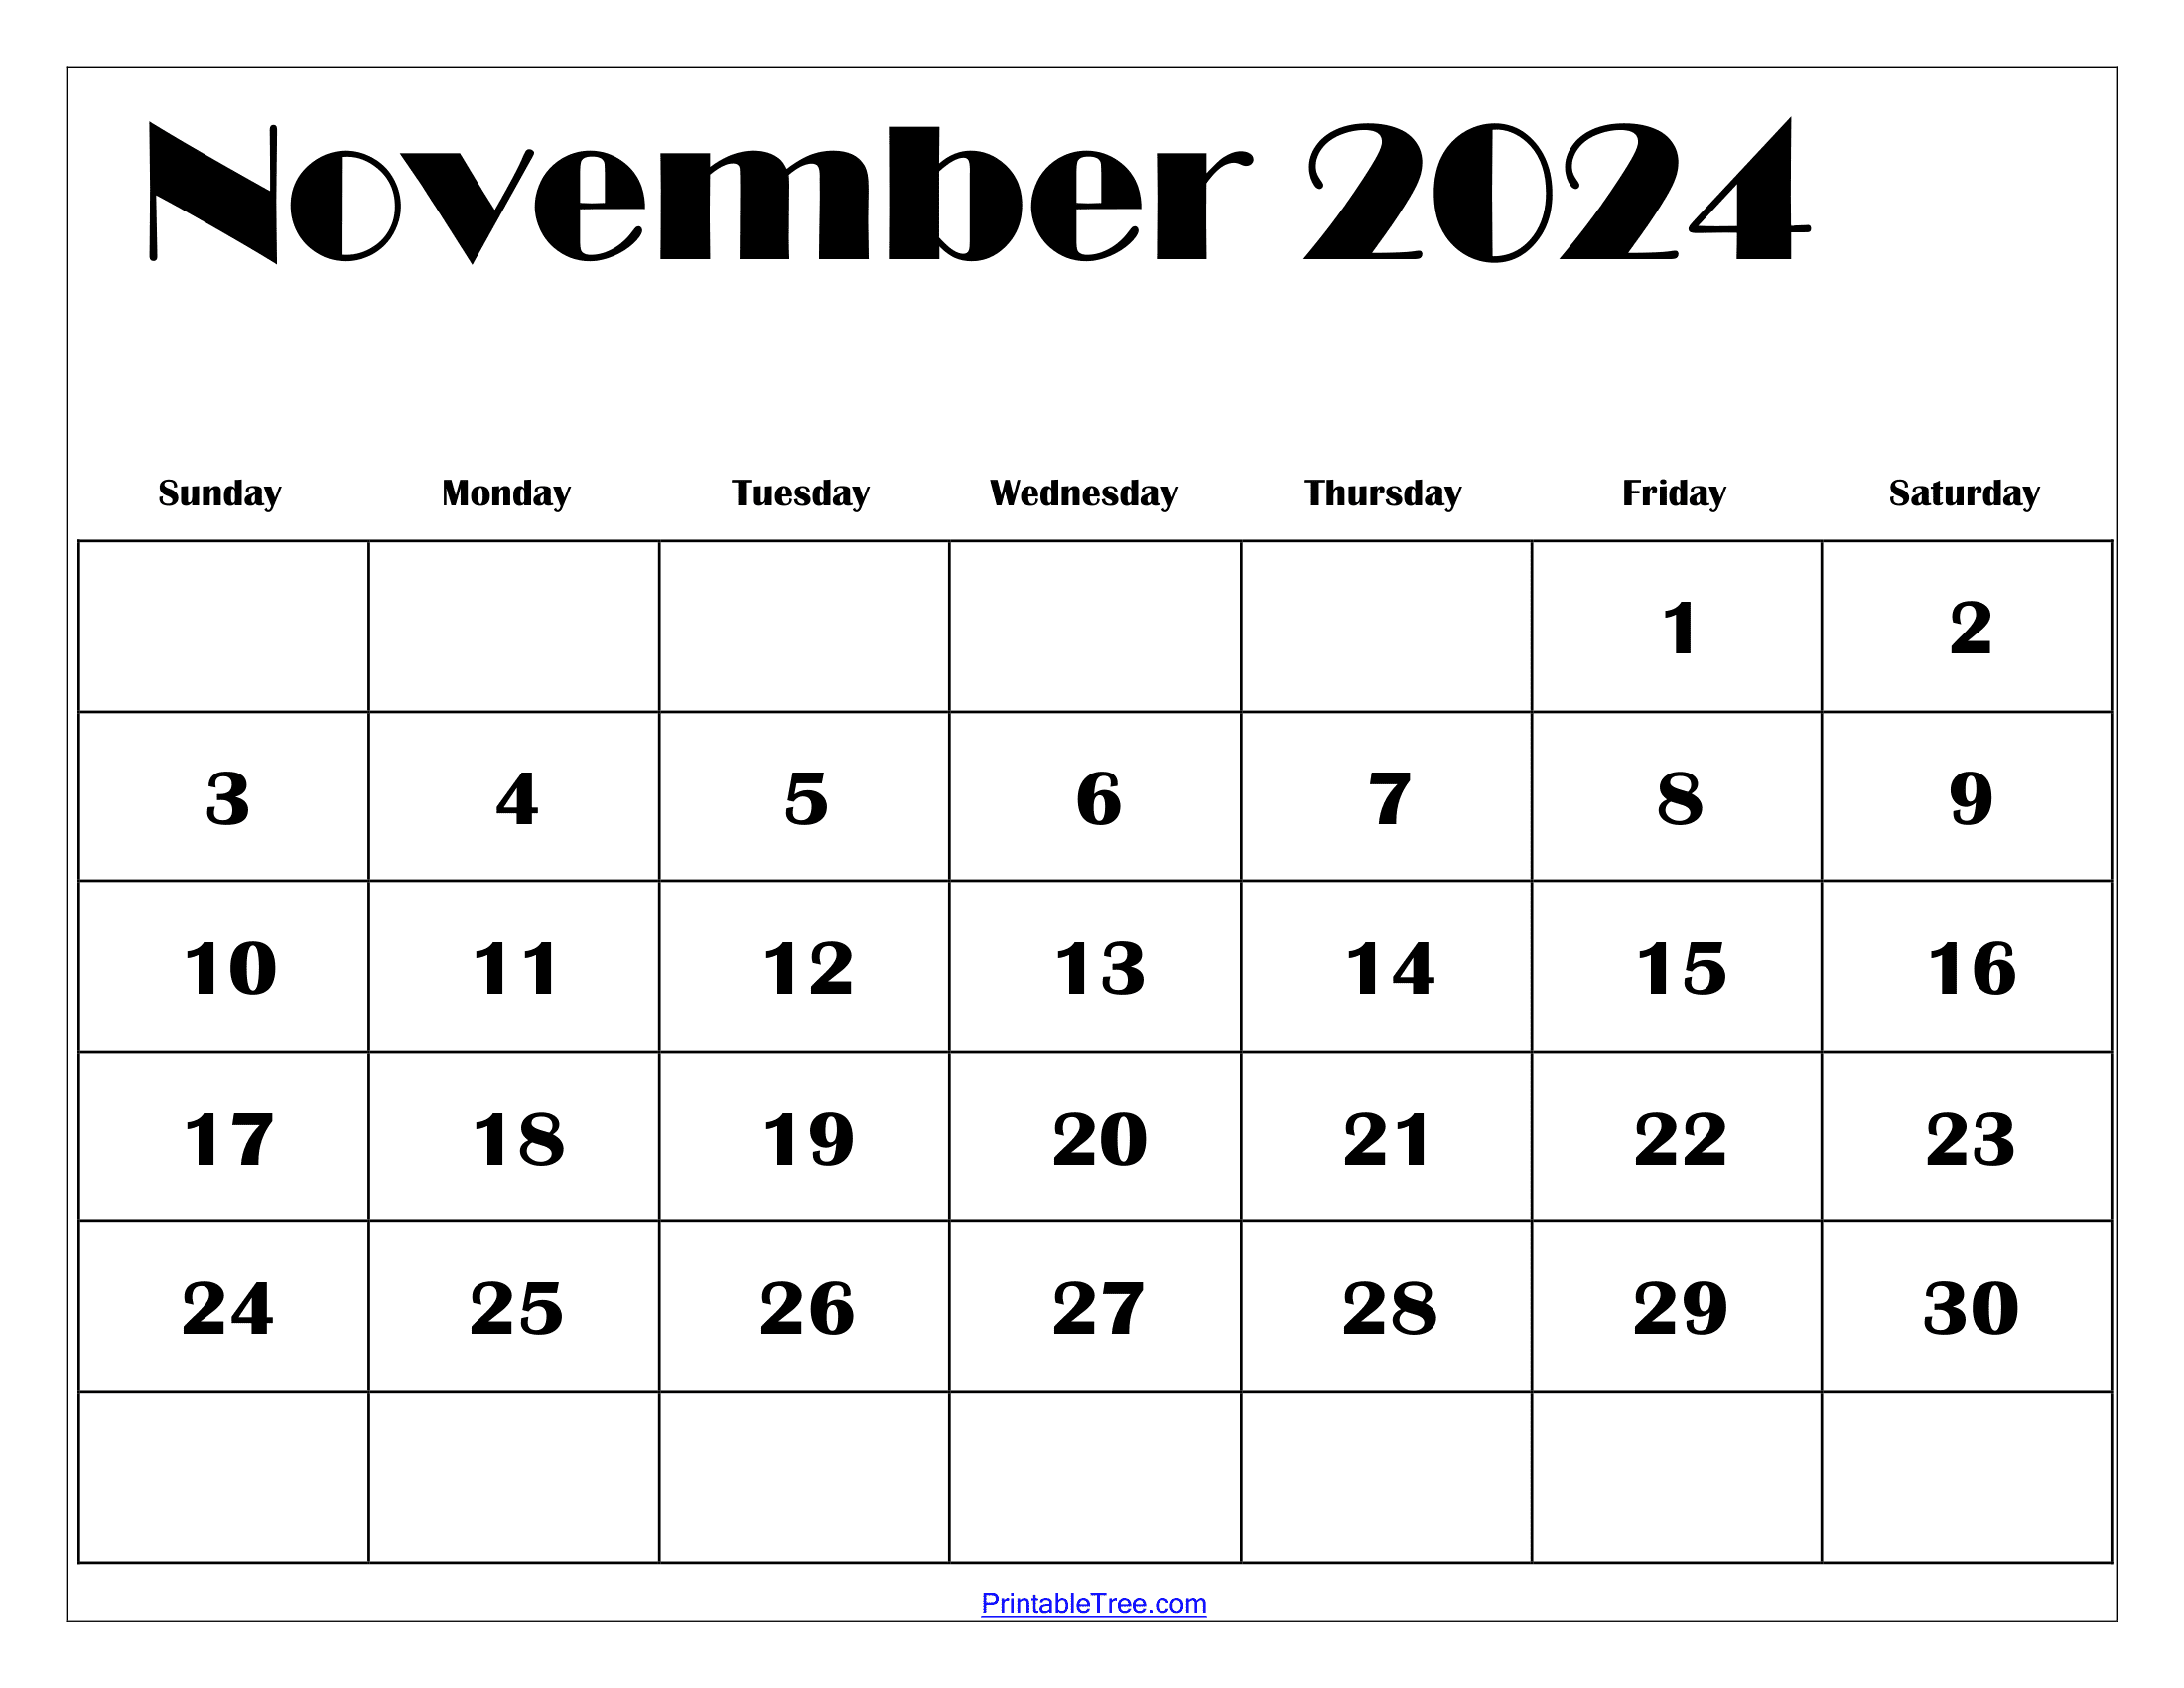 November 2024 Calendar Printable Pdf Template With Holidays for November 2024 Calendar Free Printable